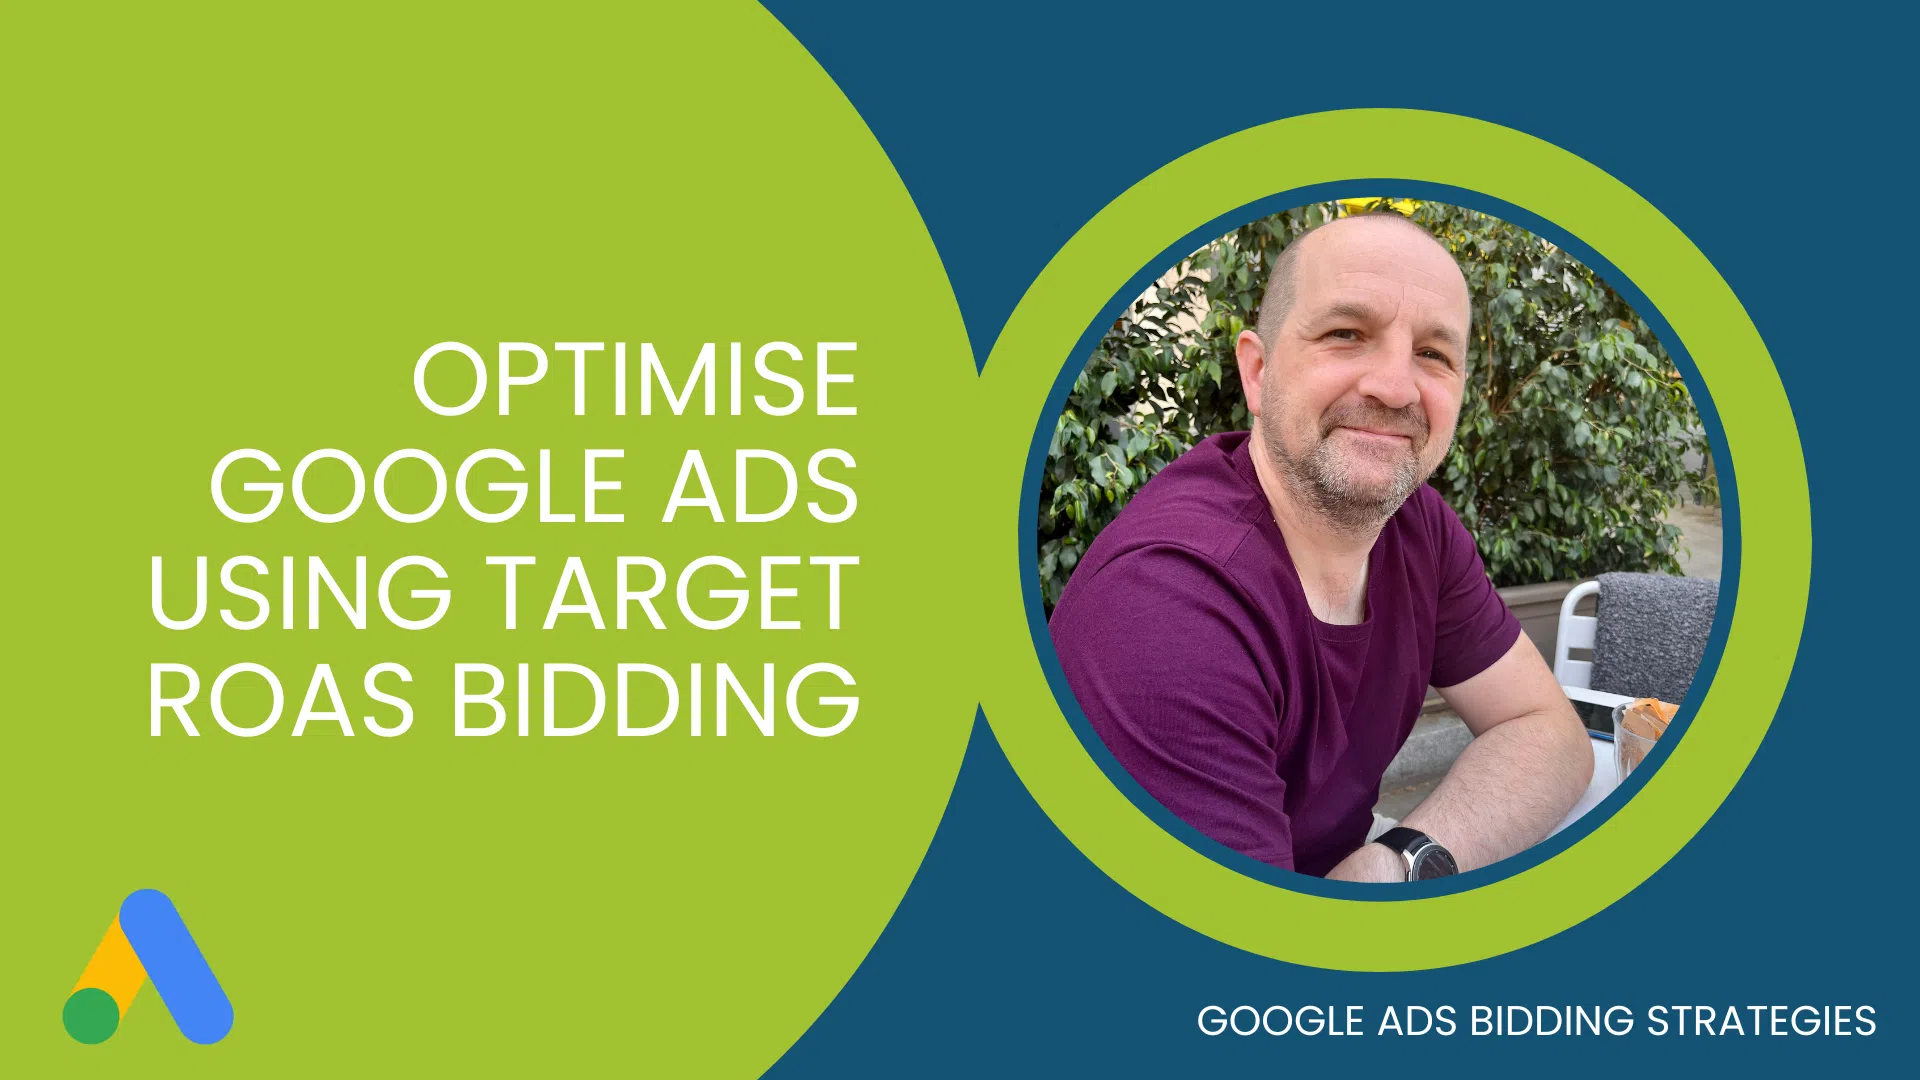 How to Optimise Google Ads Using Target ROAS Bidding